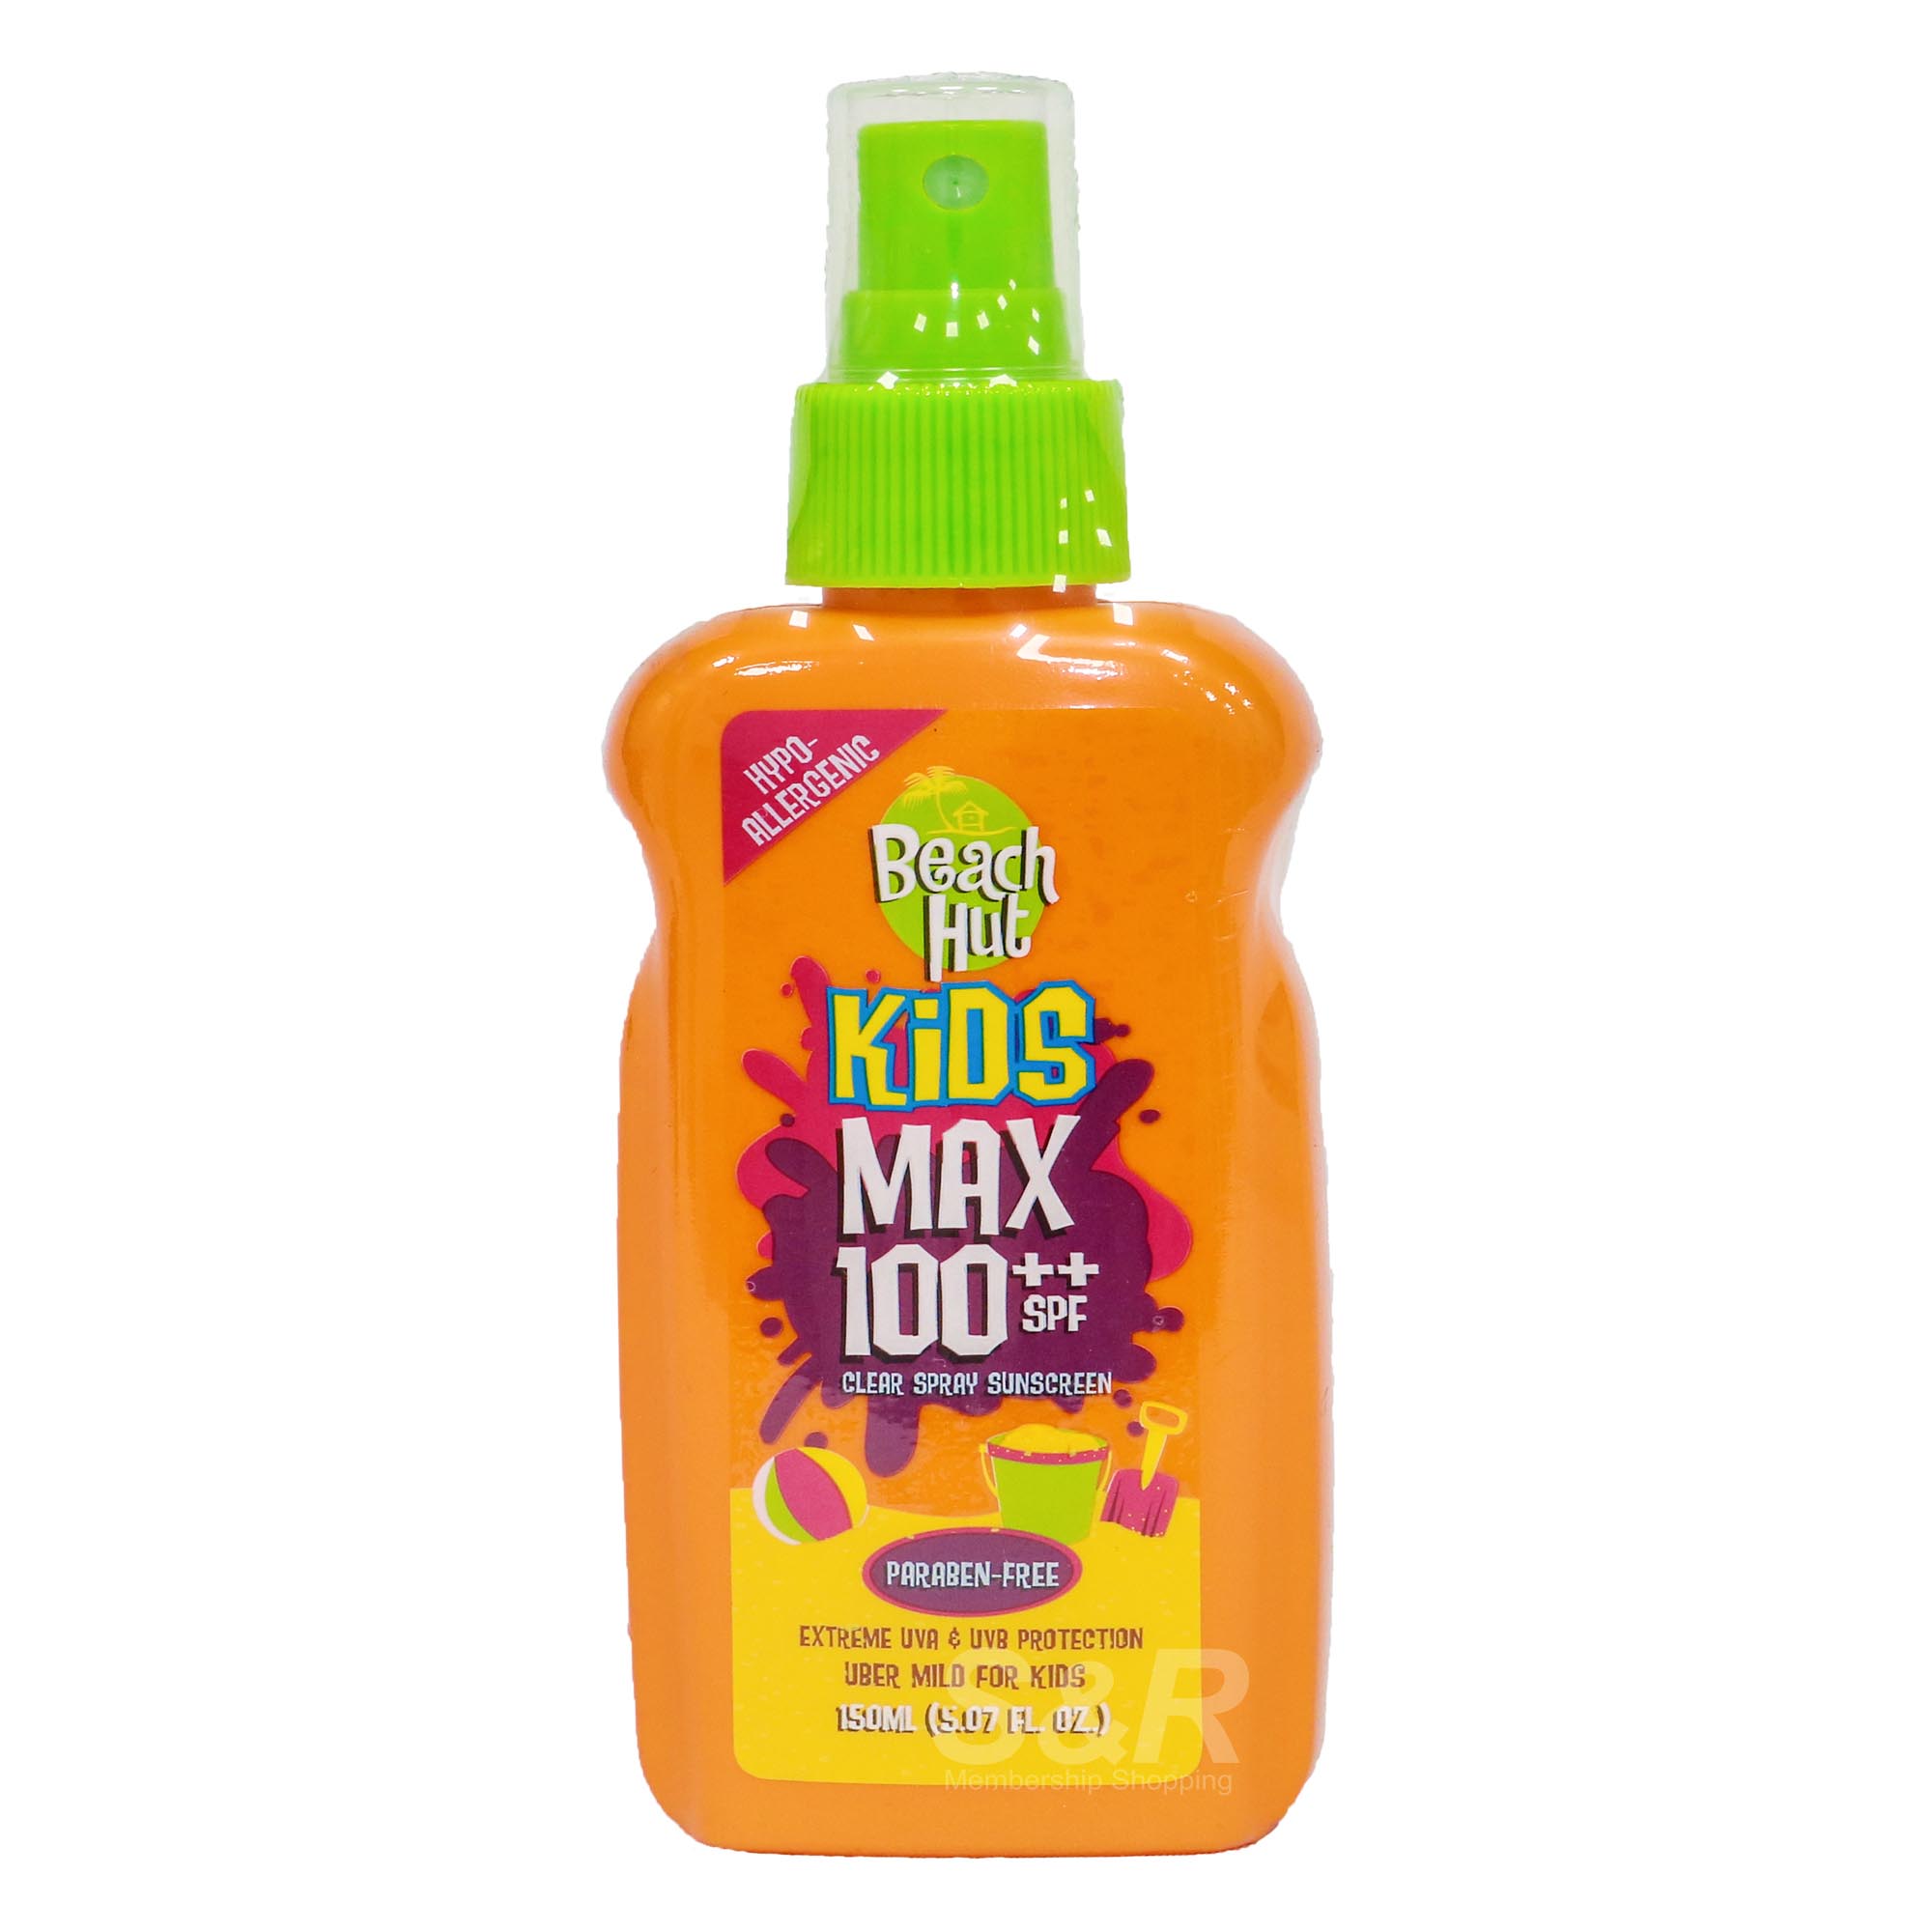 Beach Hut Kids Max 100++ SPF Clear Spray Sunscreen 150mL